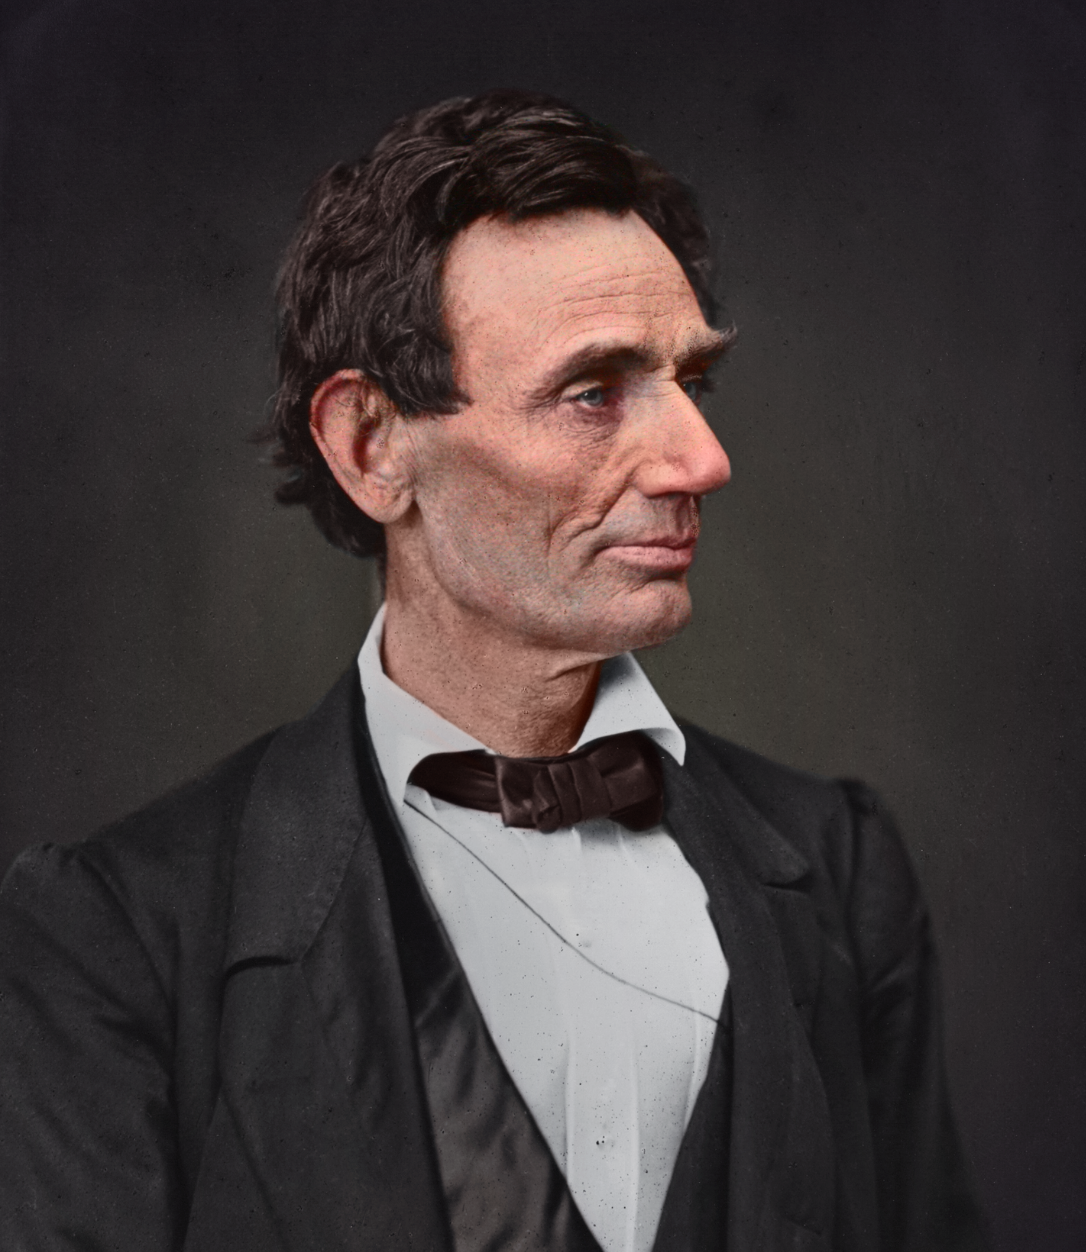 Портрет Авраама Линкольна в молодости